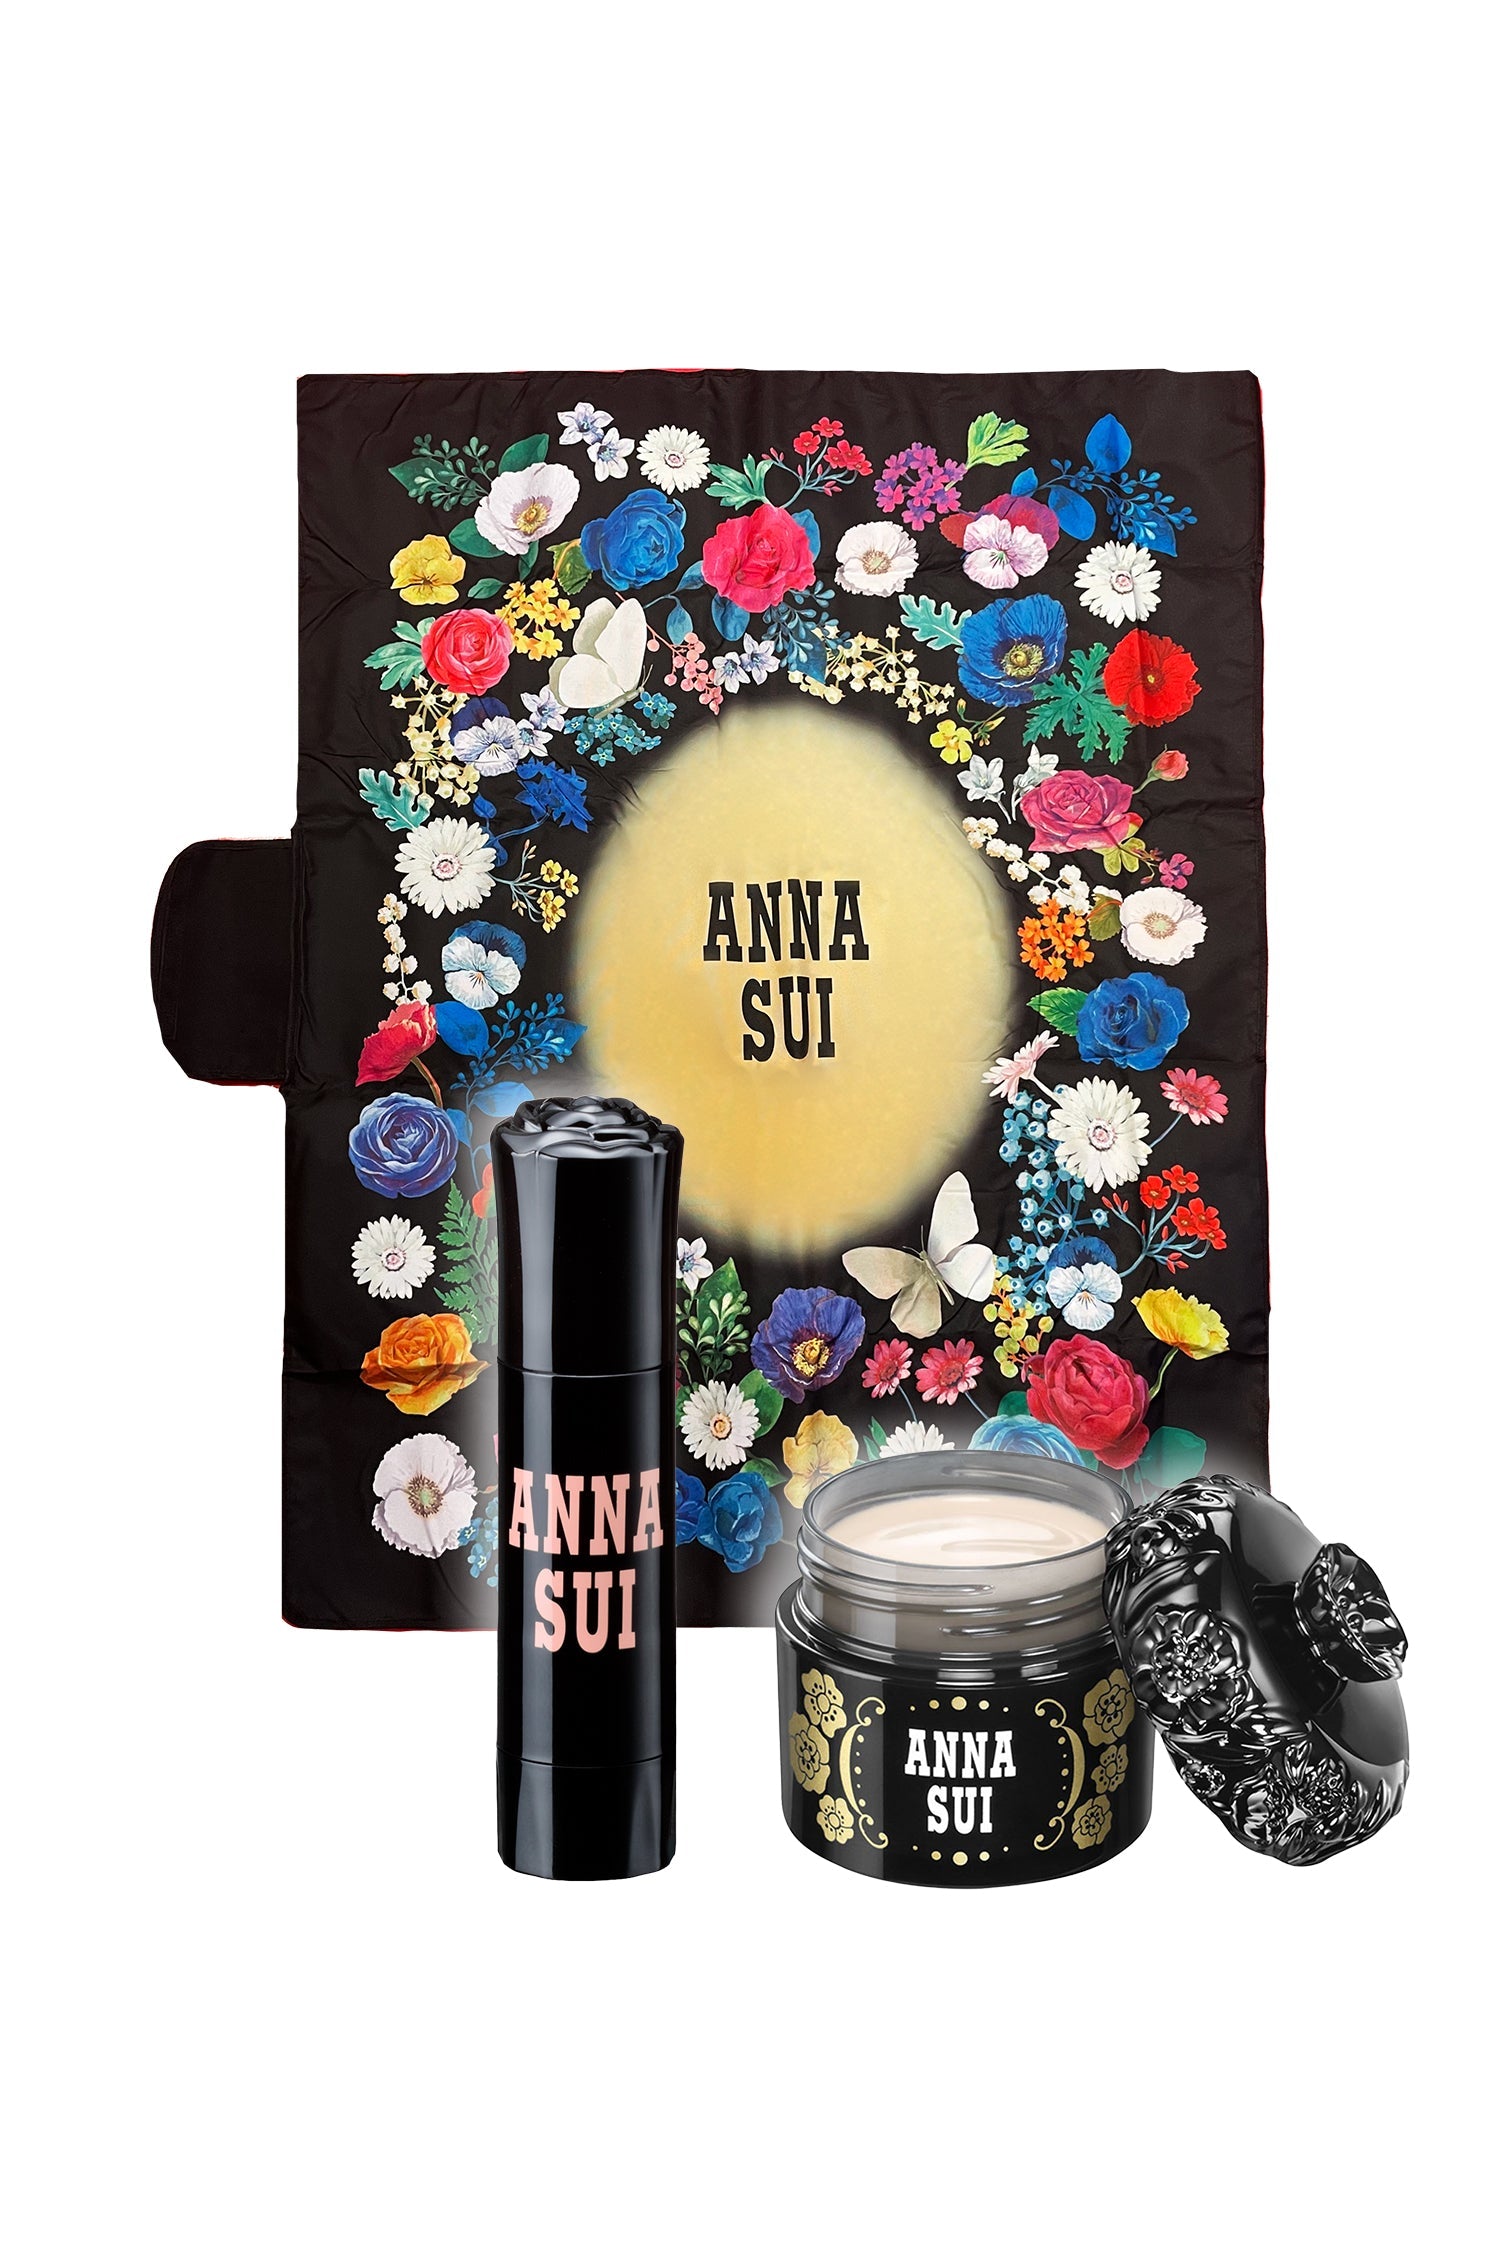 SHIMMER light cheek & primer set, Anna Sui on cylinder case, a rose on top & a black round case